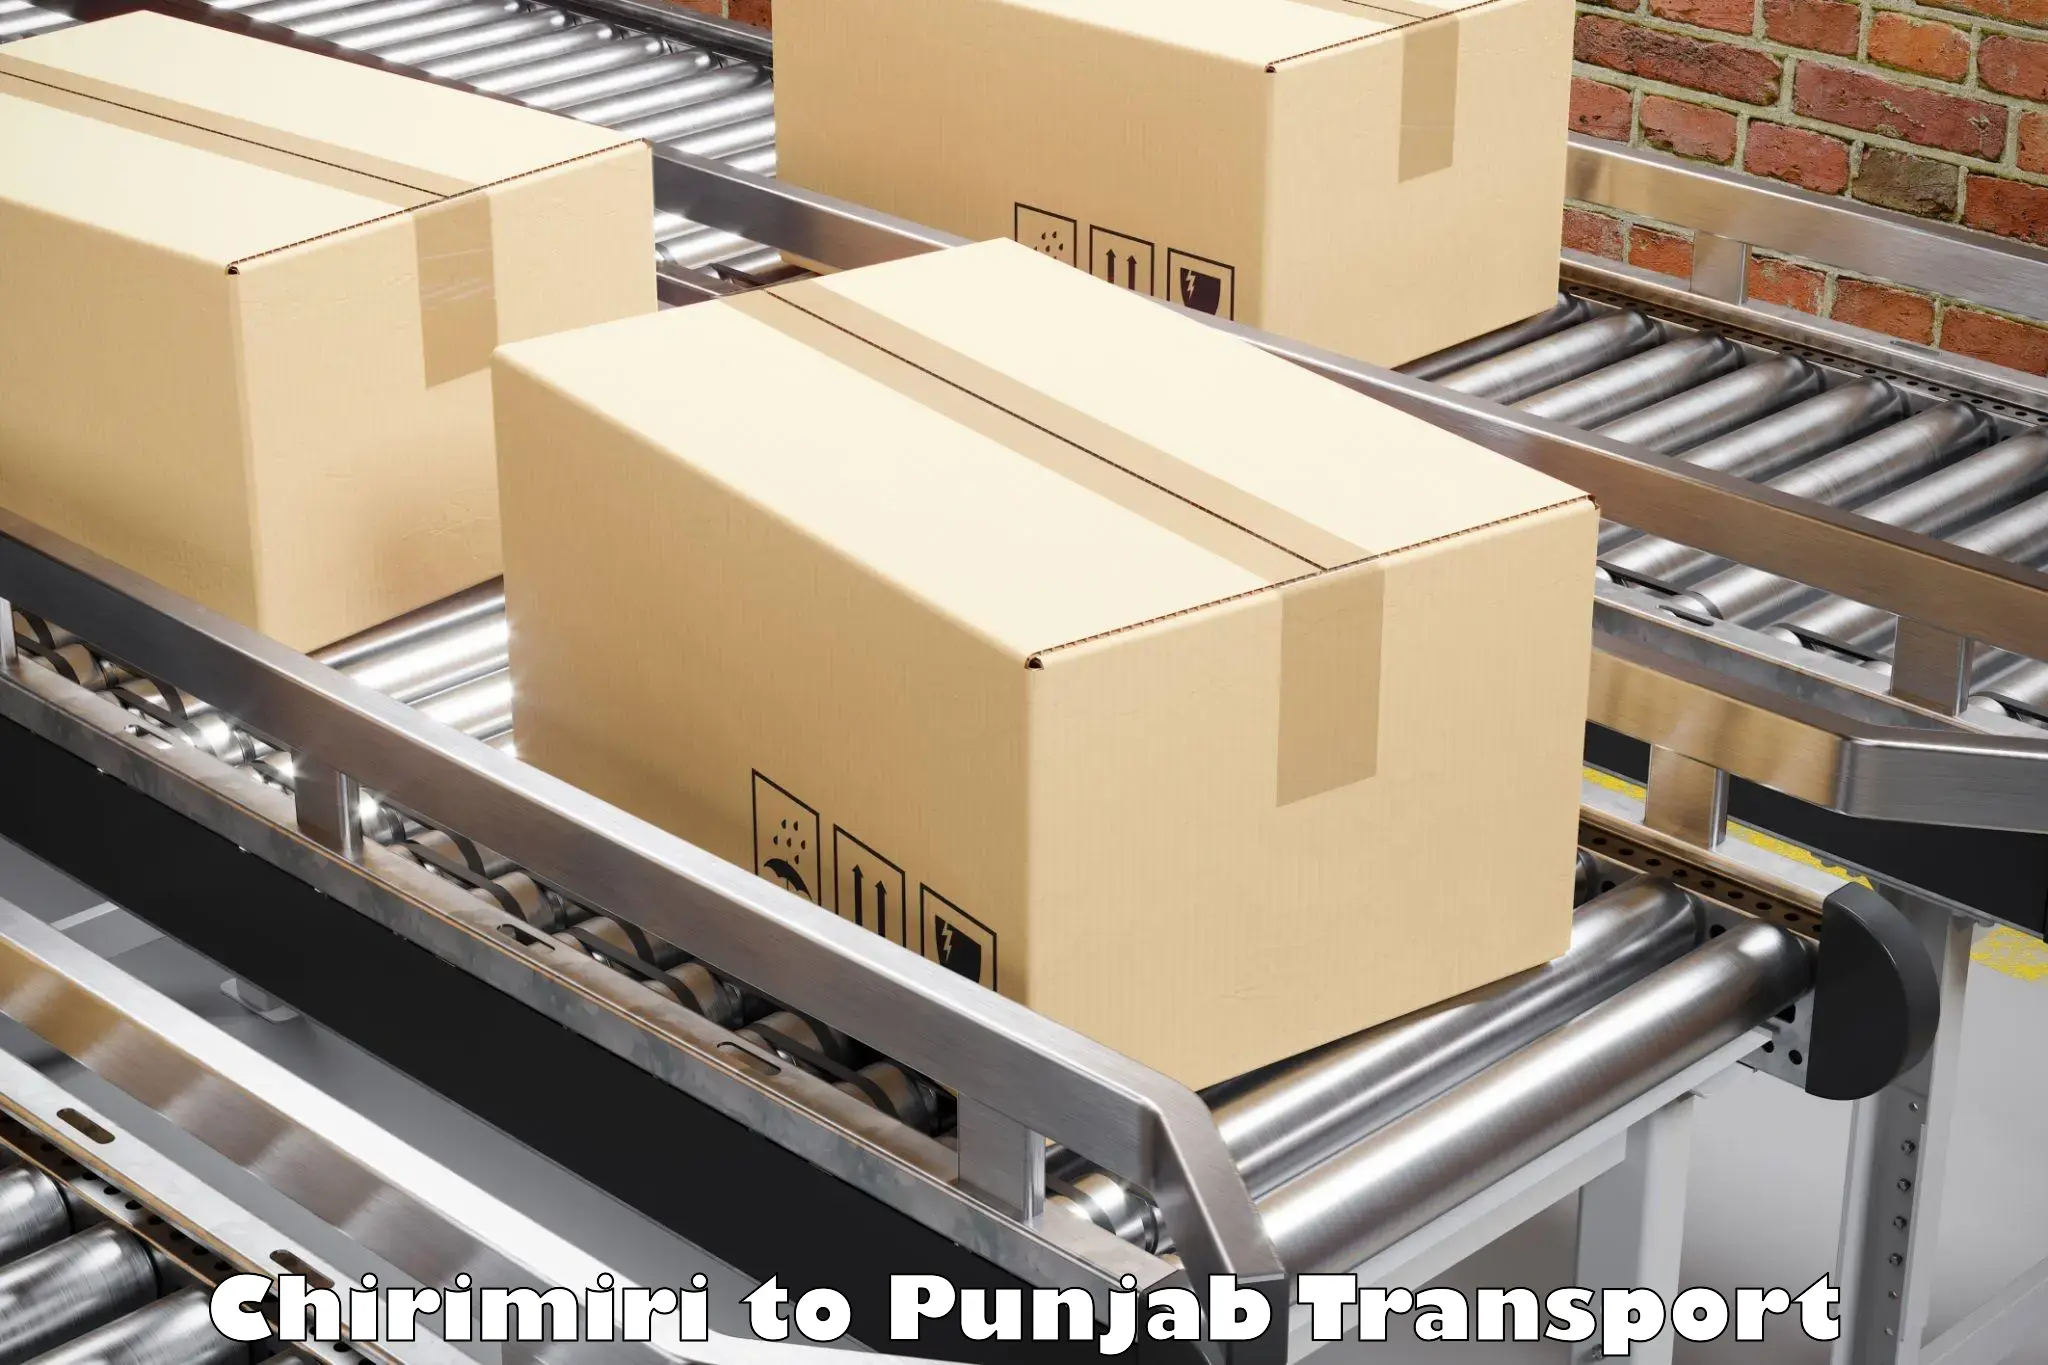 Container transport service Chirimiri to Jhunir